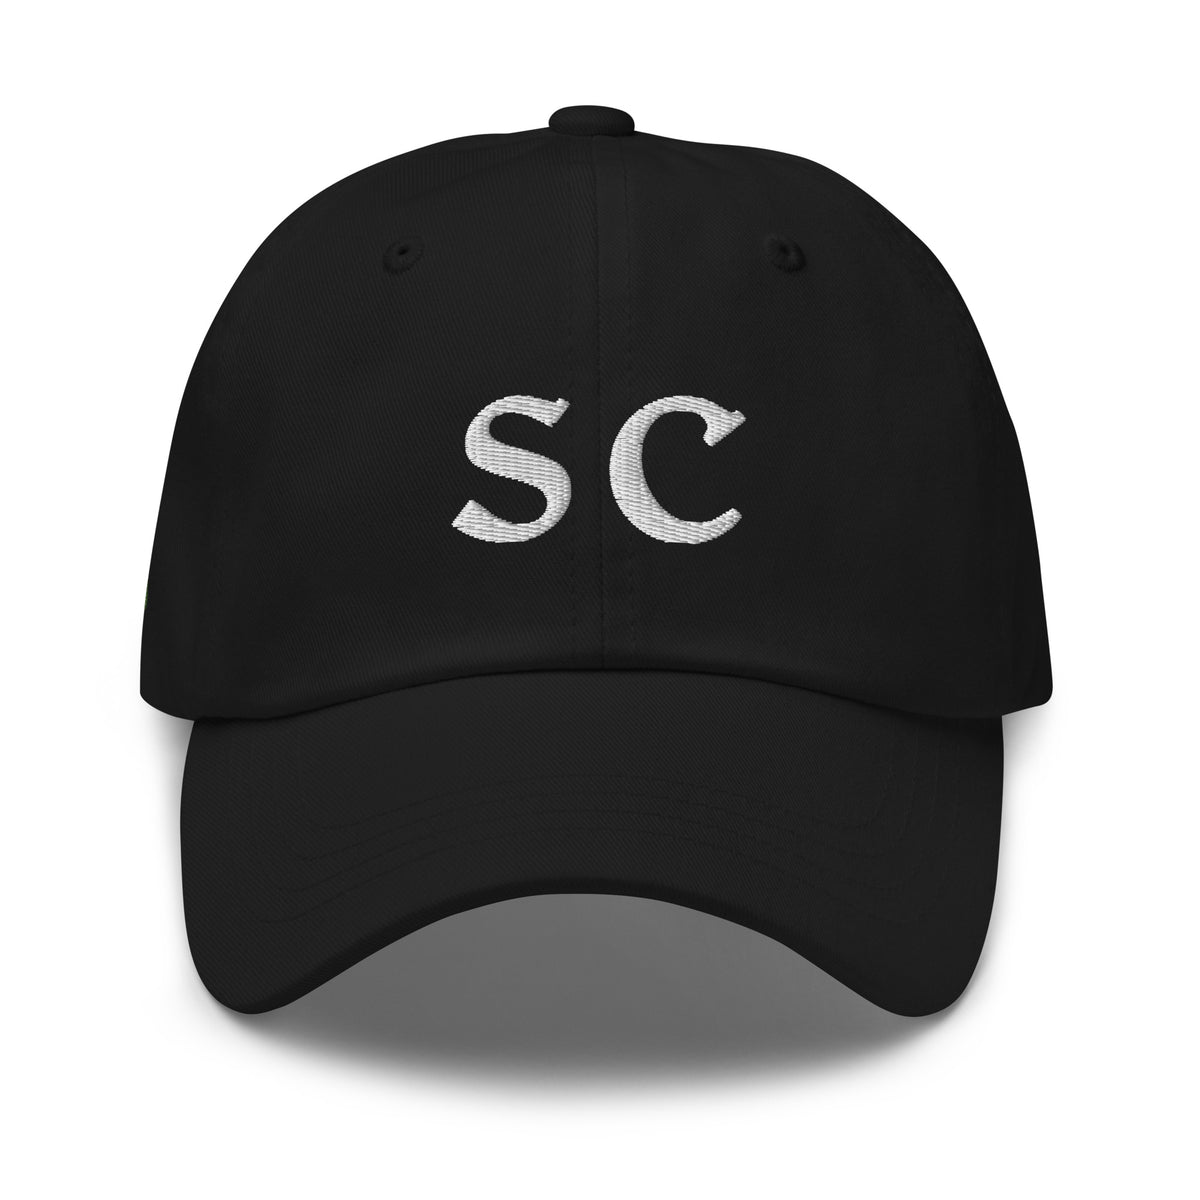 SC - Seychelles Dad hat